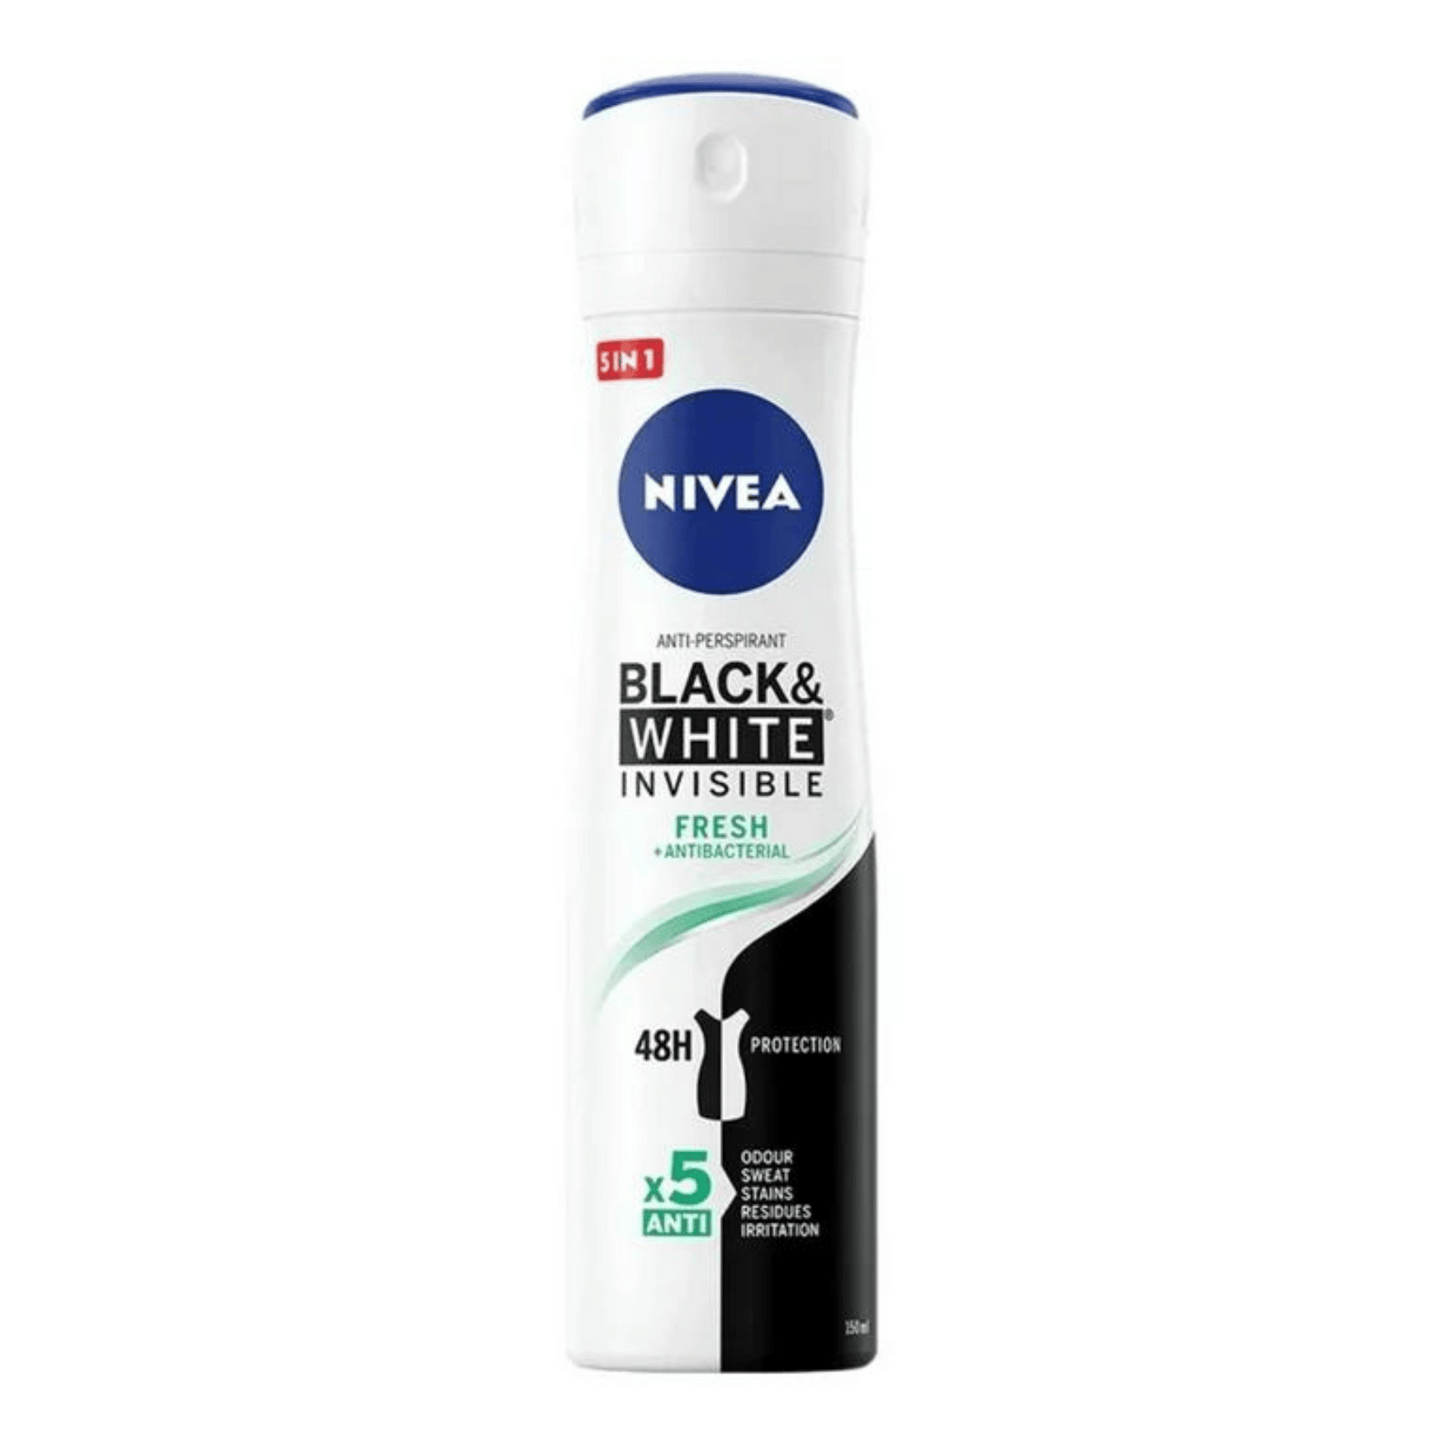 Primary Image of Women's Spray Black & White Invisible Fresh Anti-Perspirant Deodorant